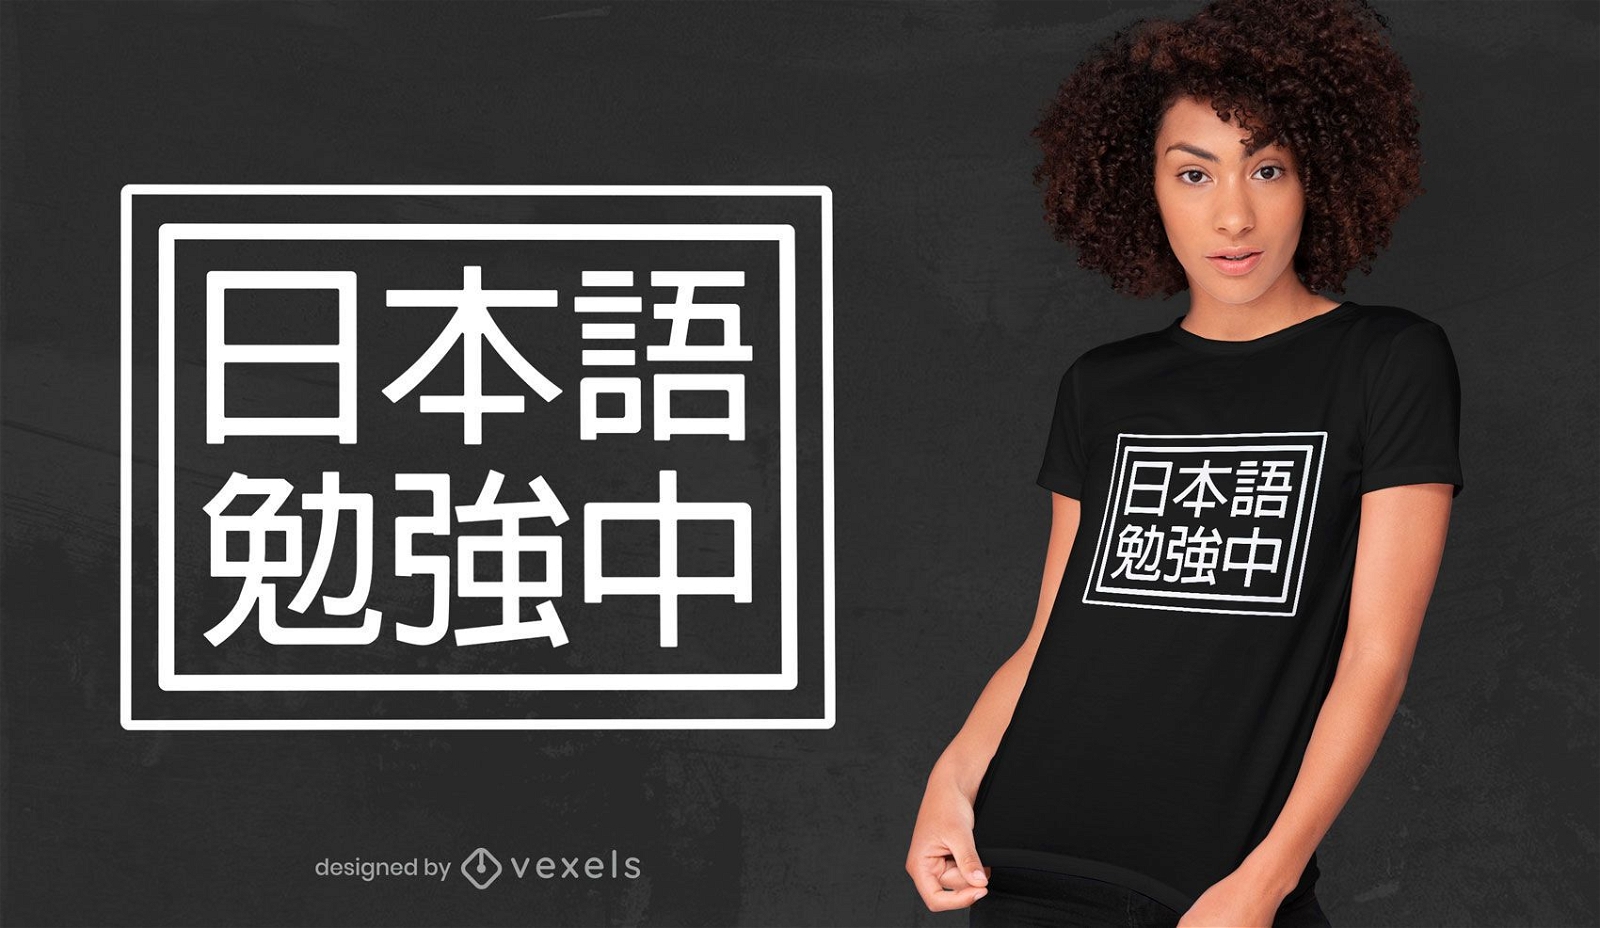 Estudiando el dise?o de camiseta kanji japon?s